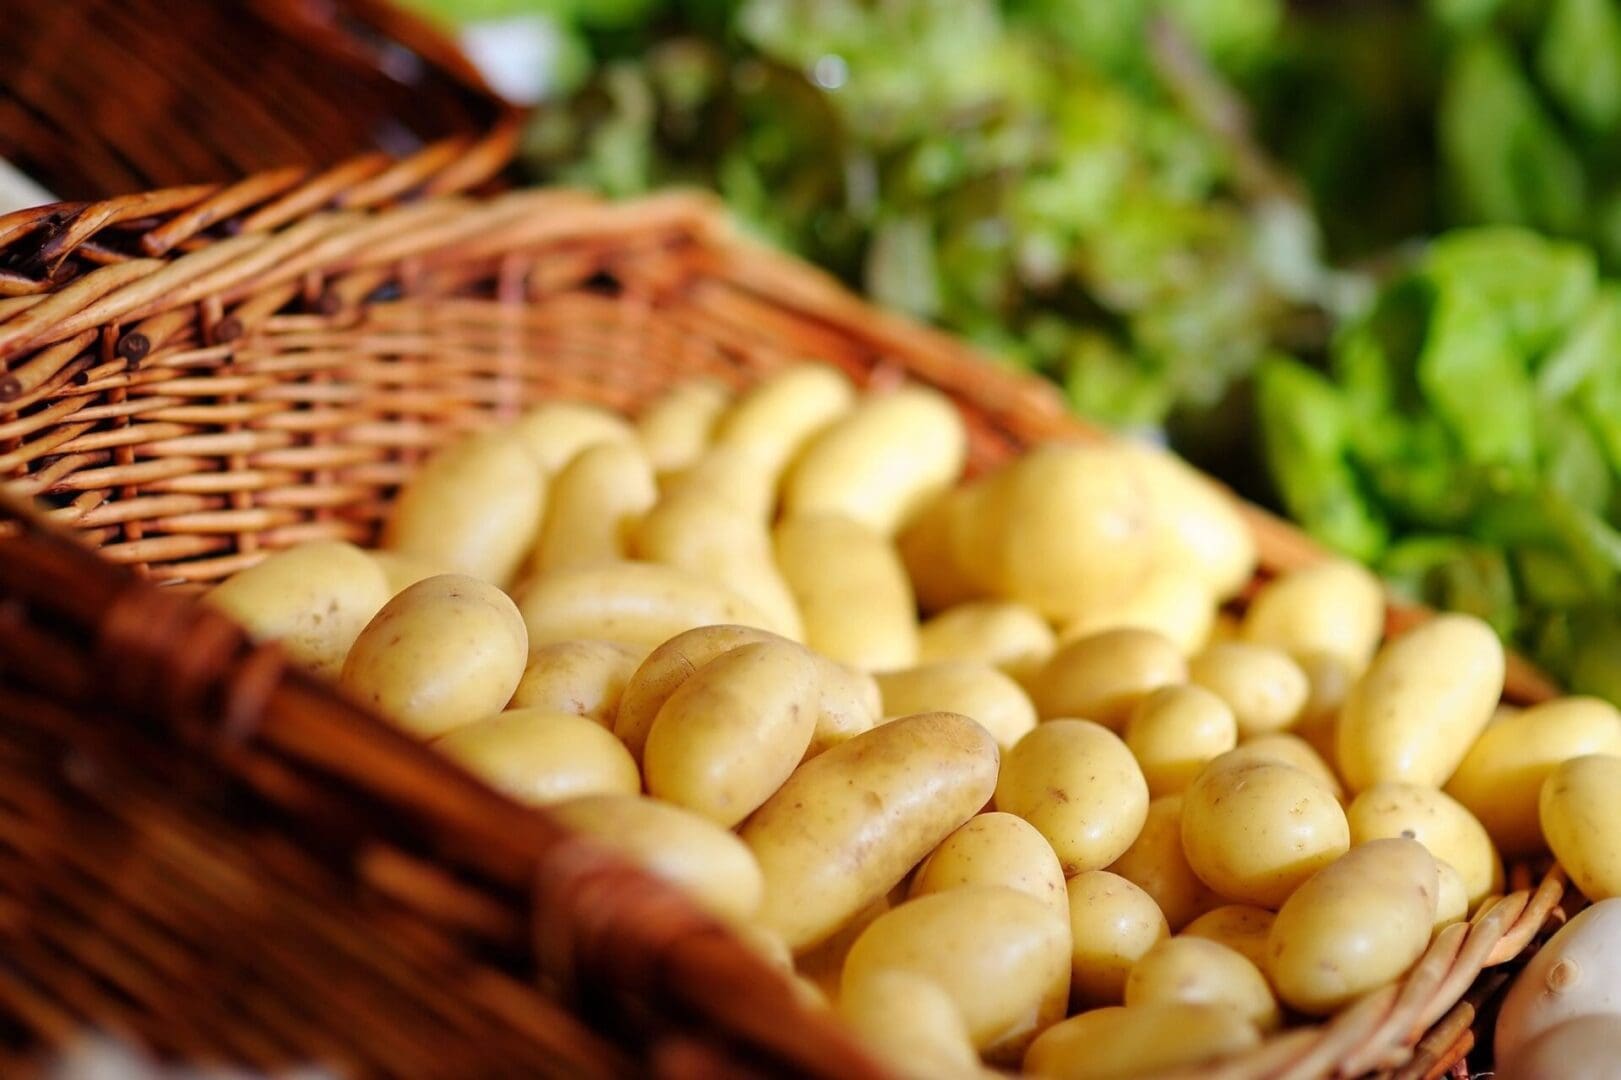 closeup shot of the farm grown potatoes